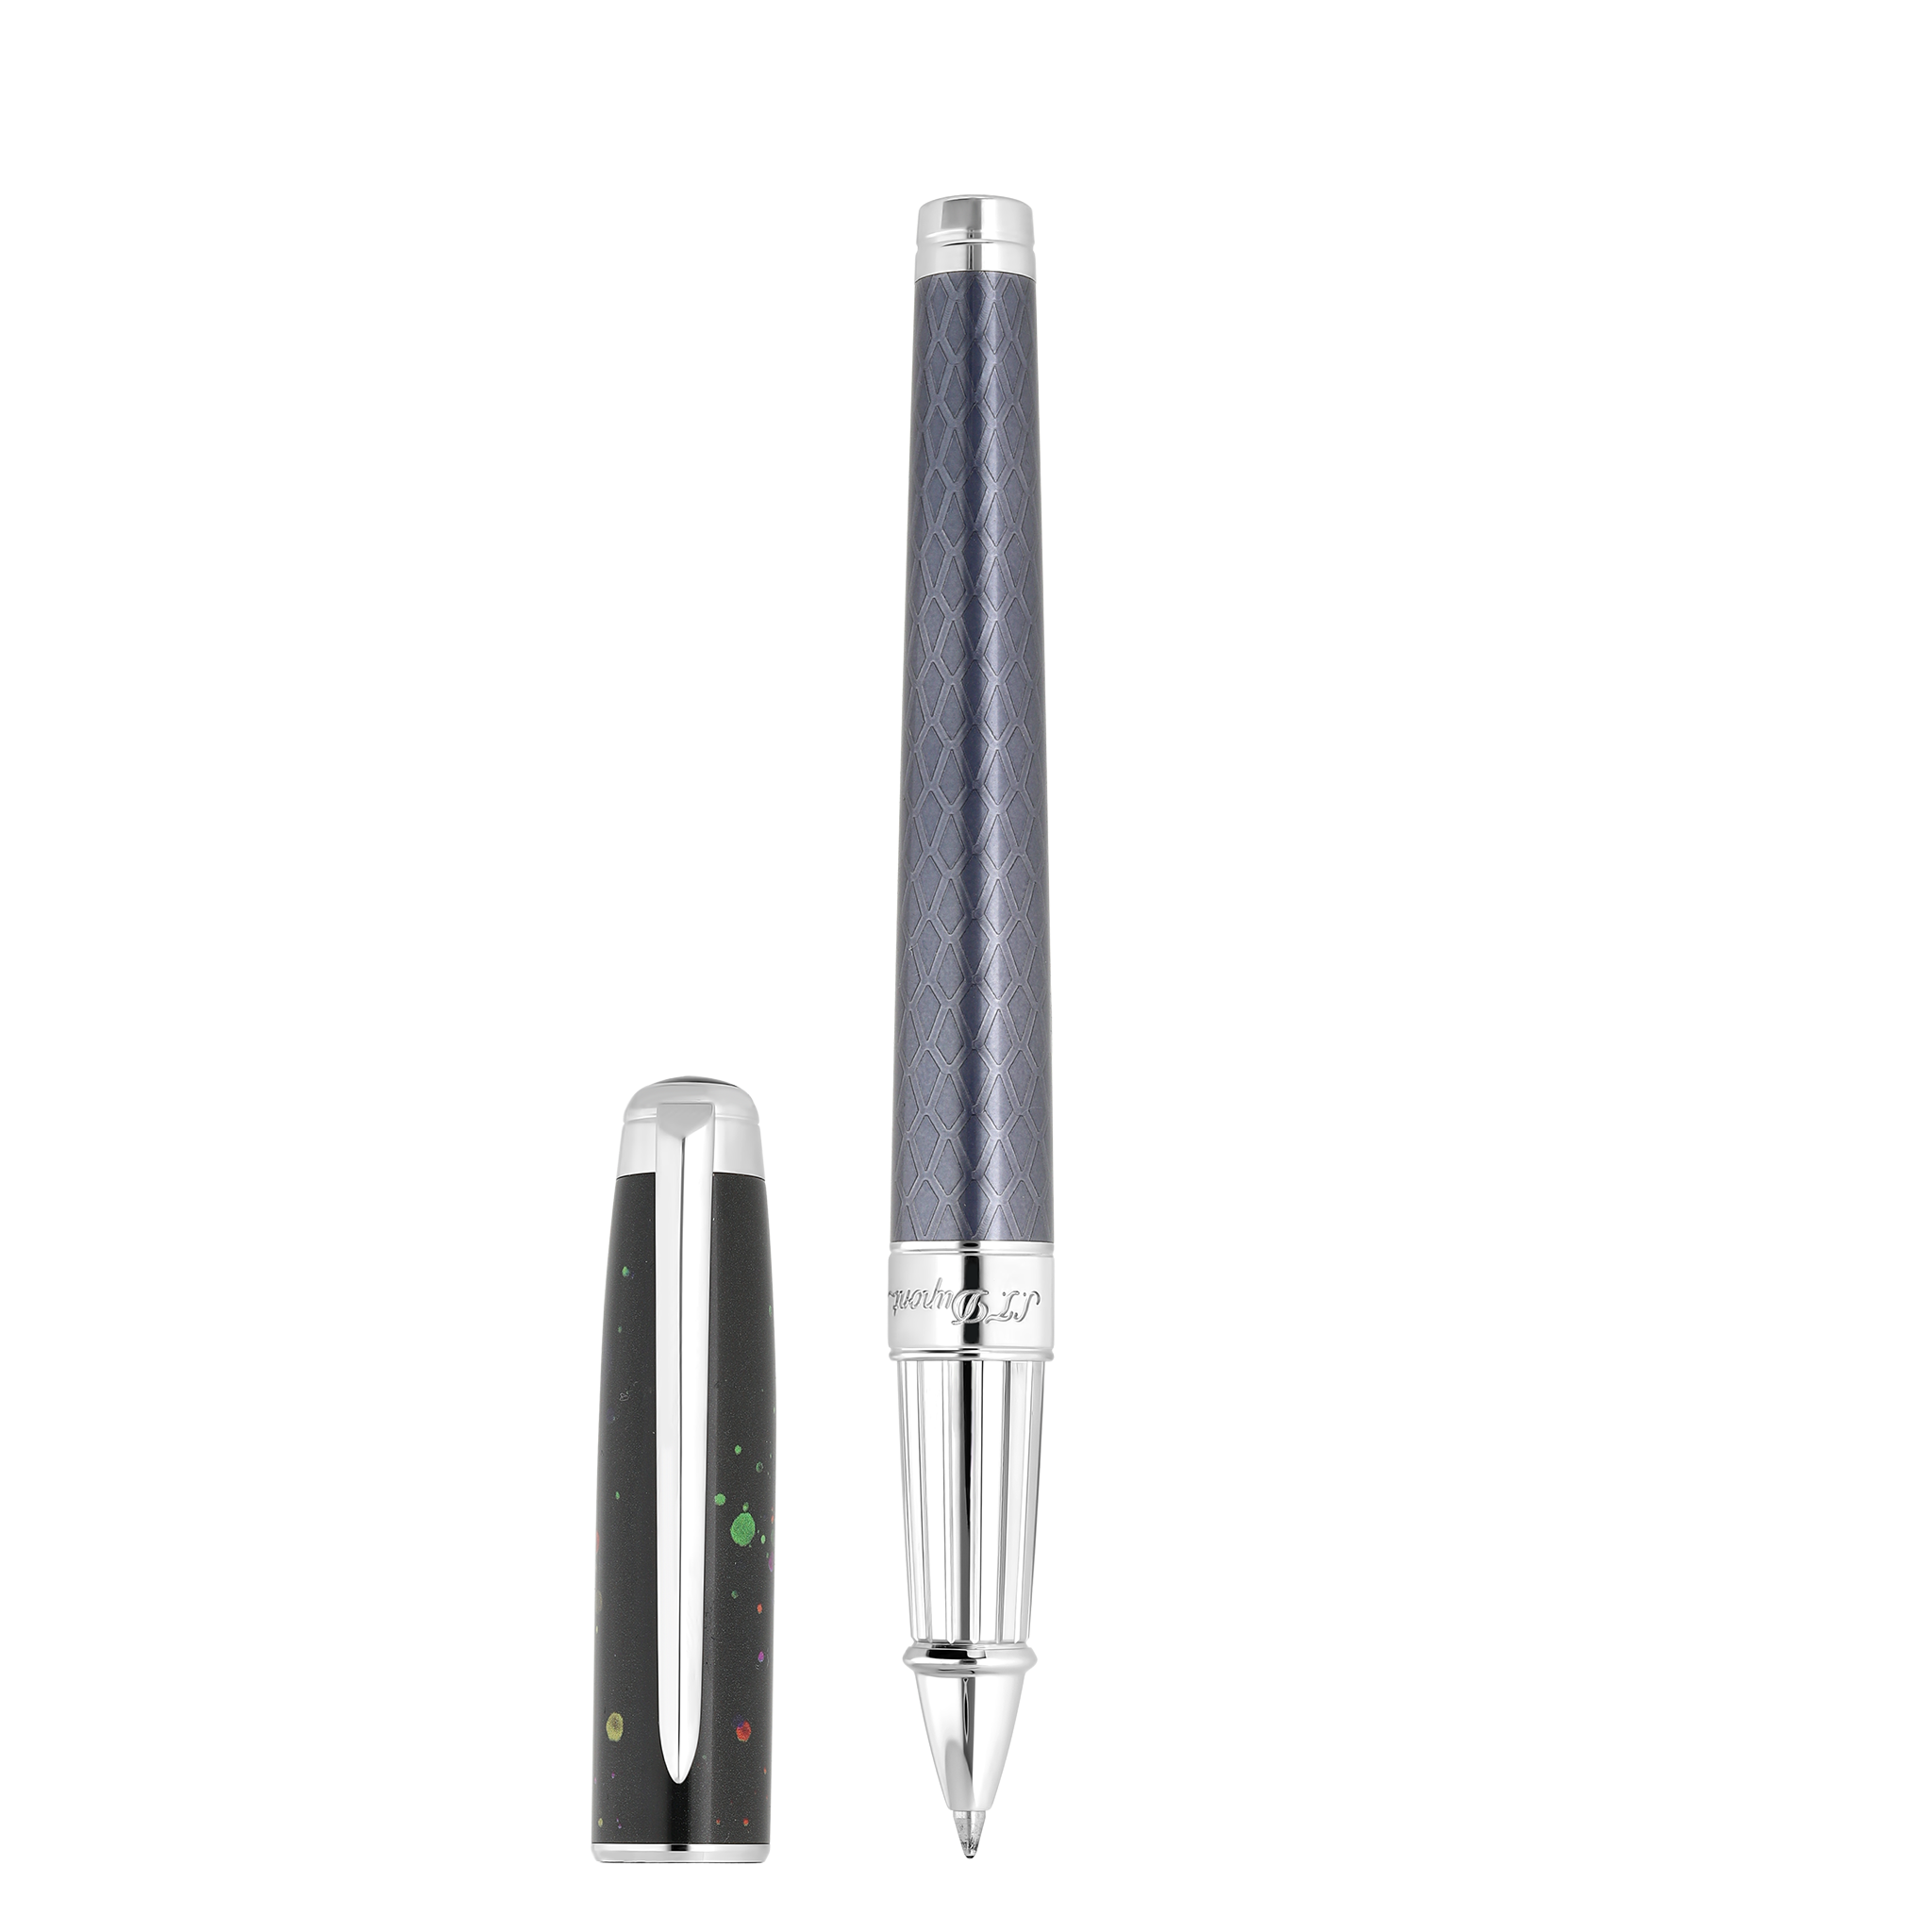 Multifunction pen